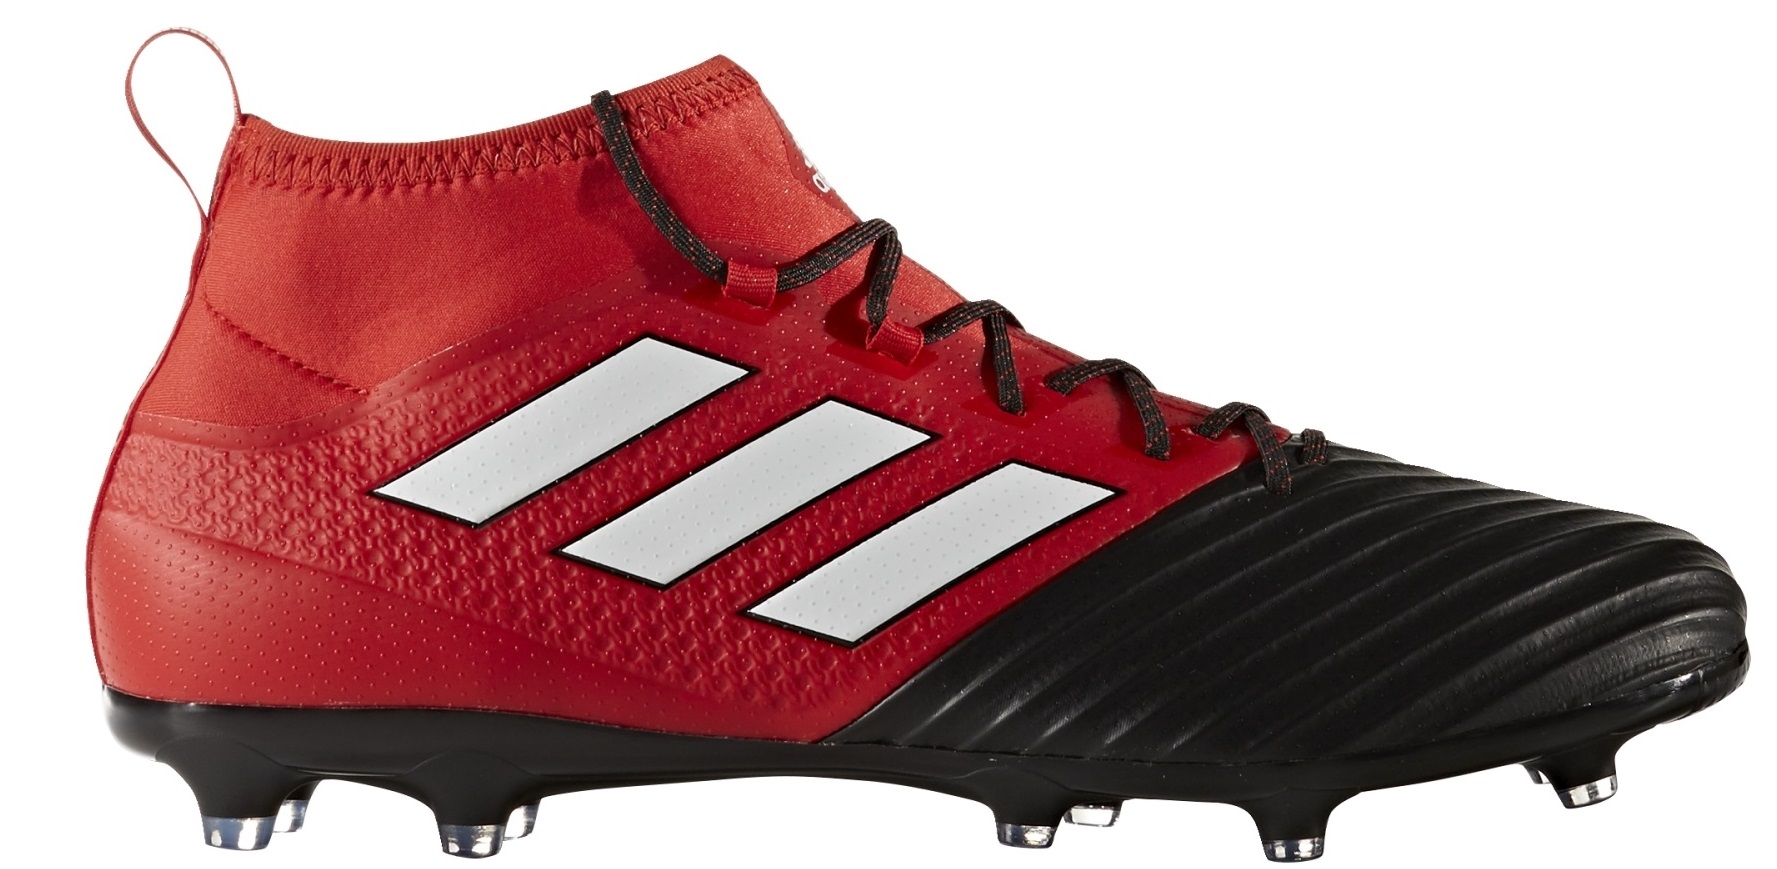 Haz un experimento hacer clic Resaltar Botas de Fútbol Adidas Ace 17.2 Primemesh FG Rojo Límite Pack colore rojo  negro - Adidas - SportIT.com